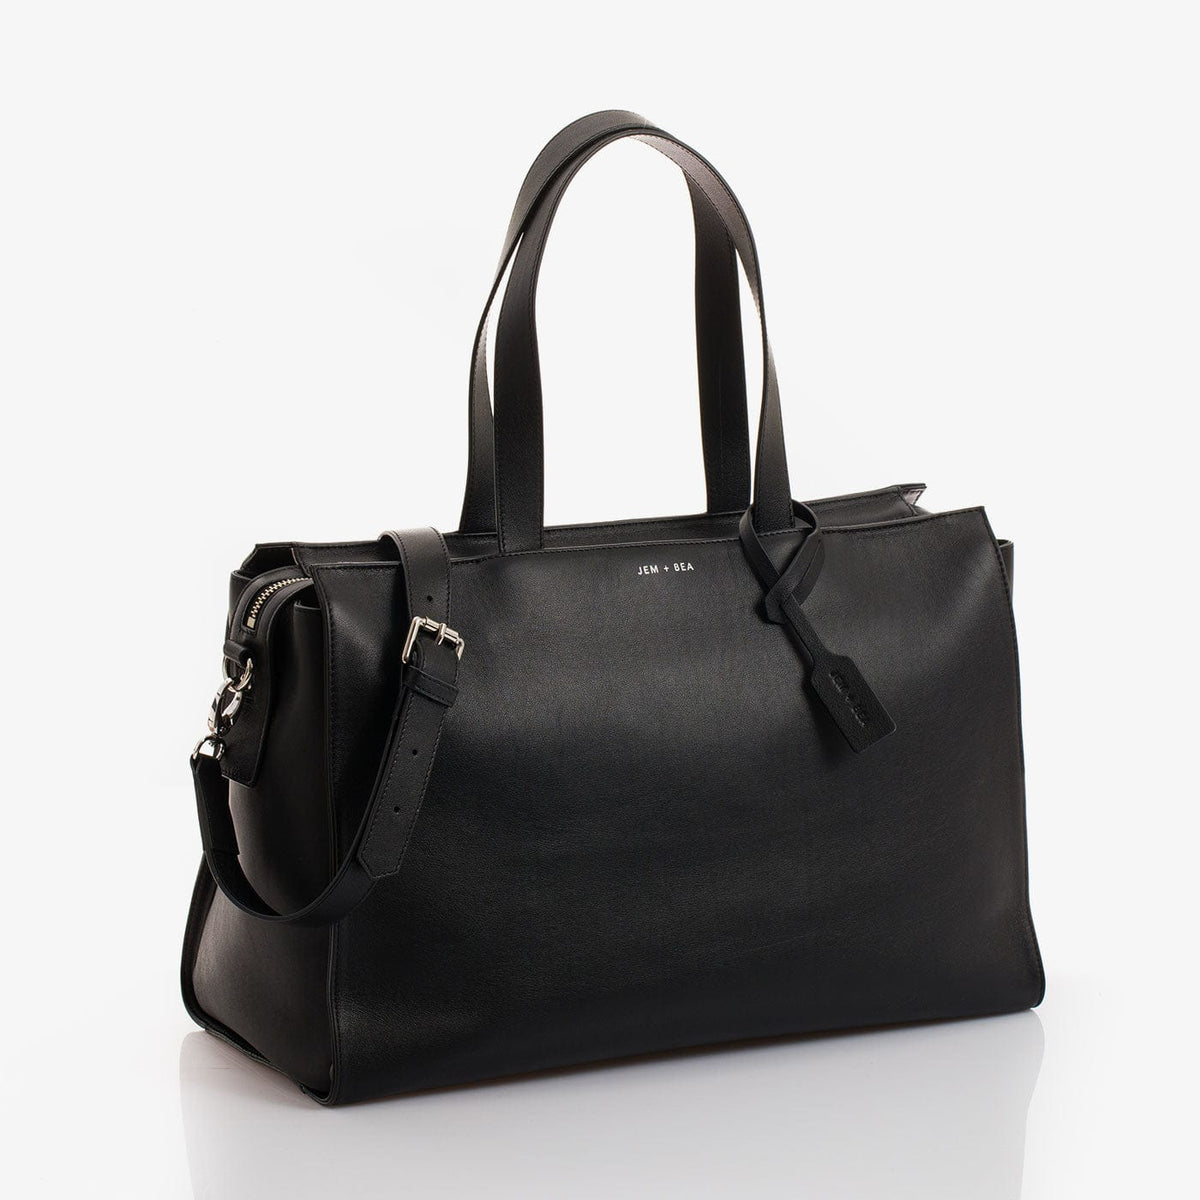 Jem + Bea Margot Leather Bag - Black